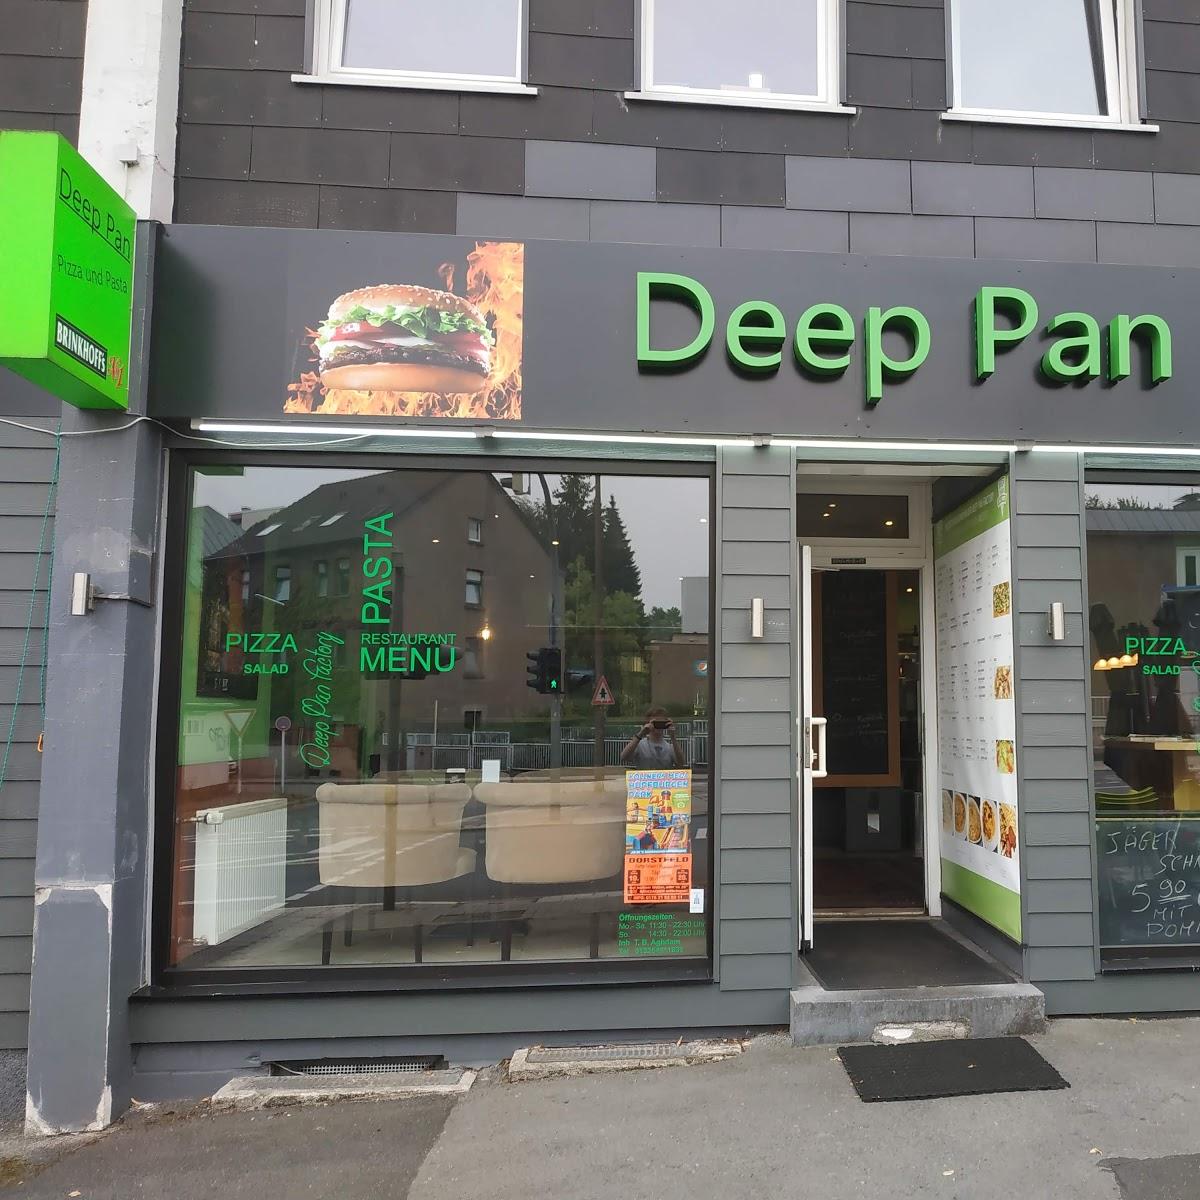 Restaurant "Deep Pan Factory" in Dortmund